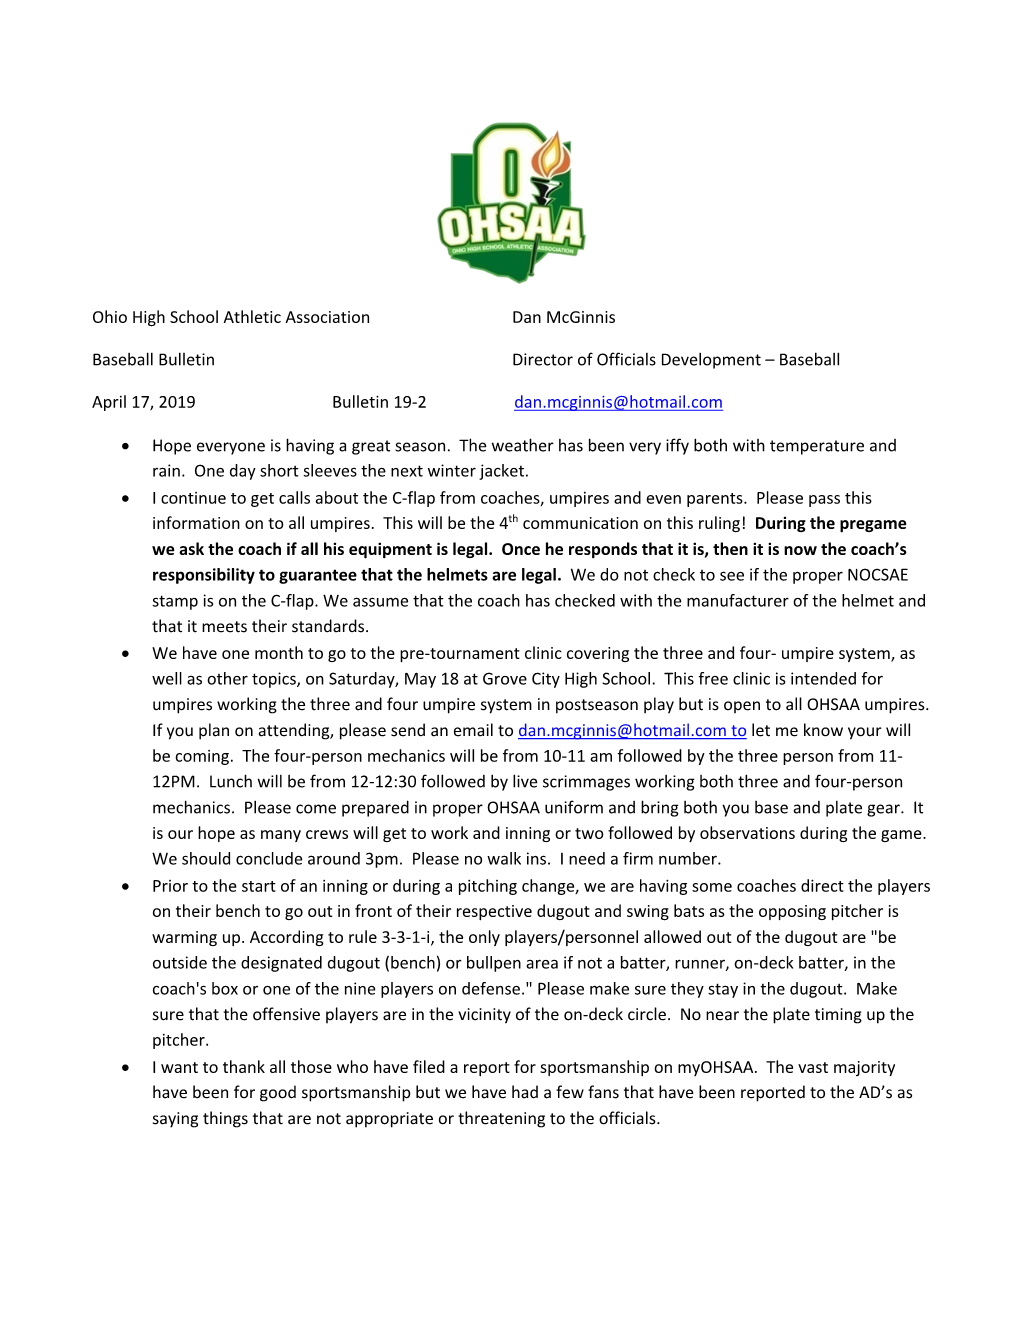 Ohio High School Athletic Association Dan Mcginnis Baseball Bulletin